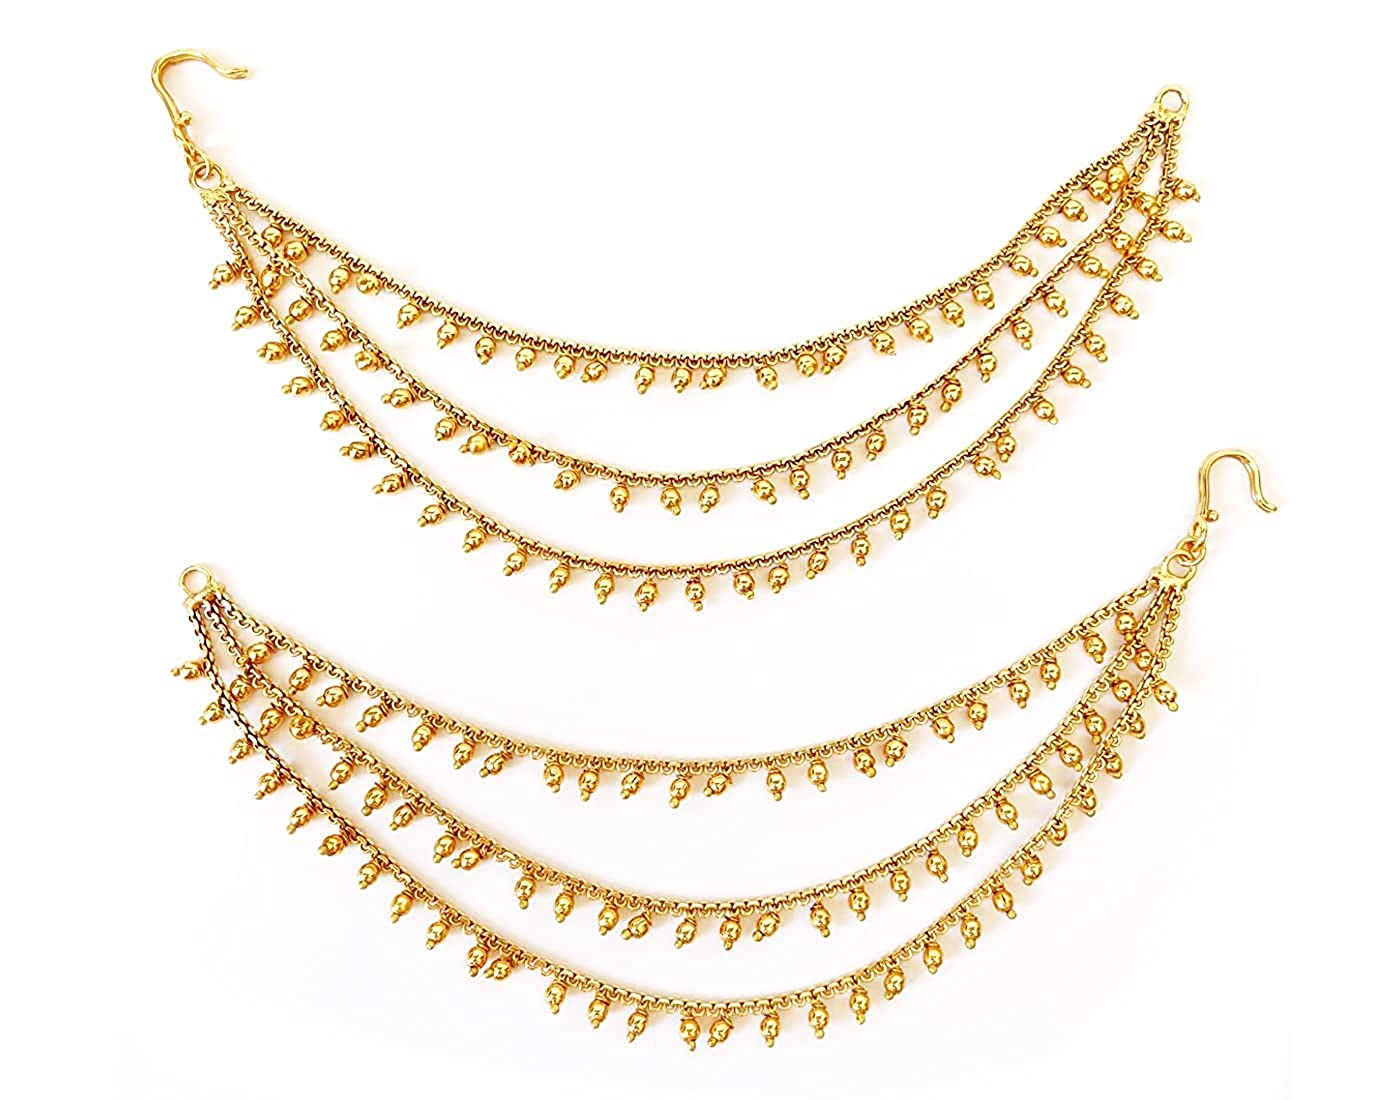 Hair Chain Accessories for Earrings Golden kan Chain Champaswaralu earchains